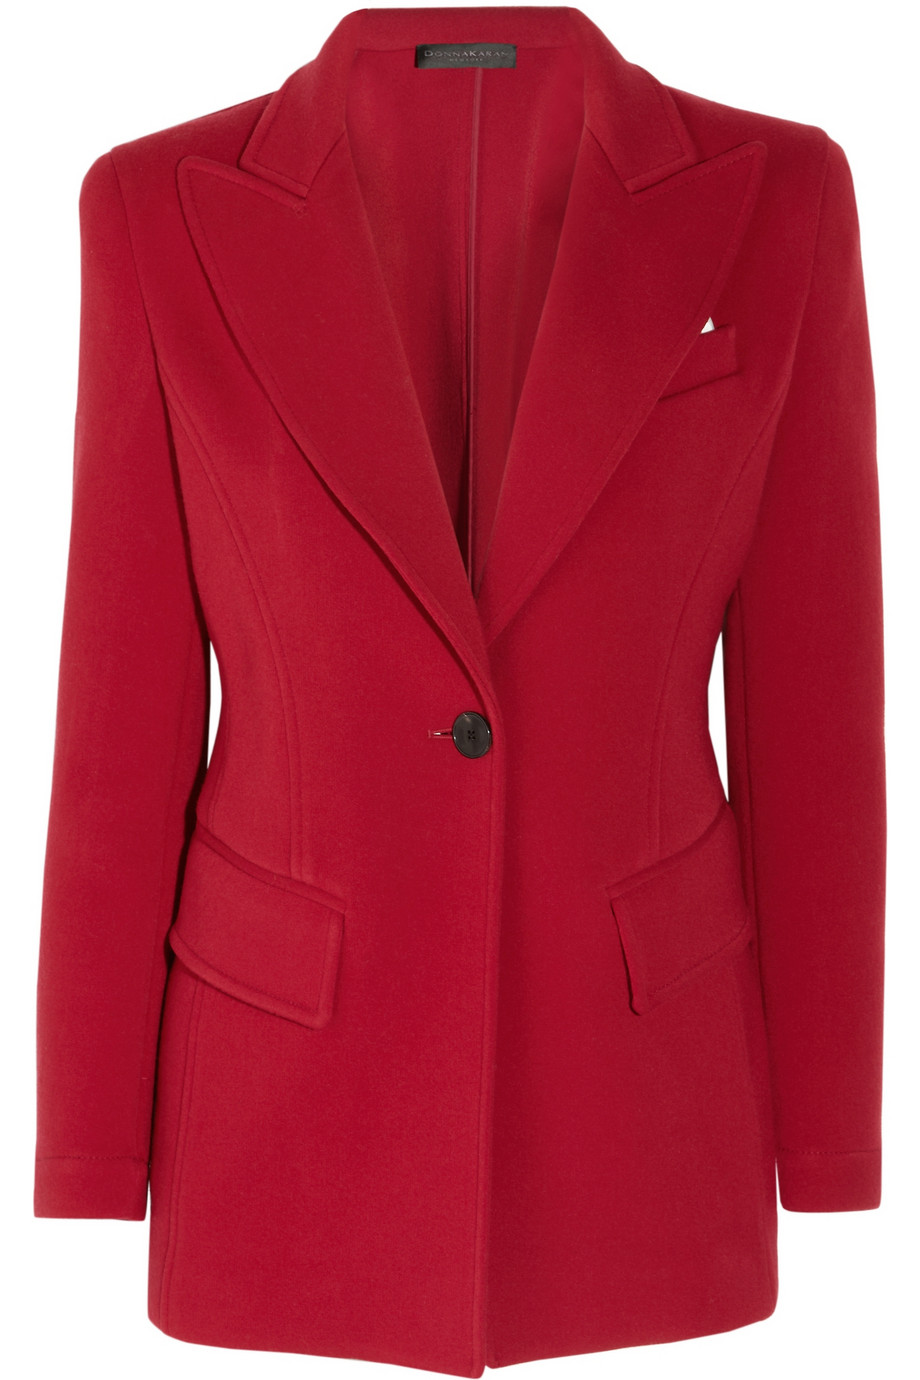 Lyst - Donna Karan Wool Blend Riding Jacket in Red